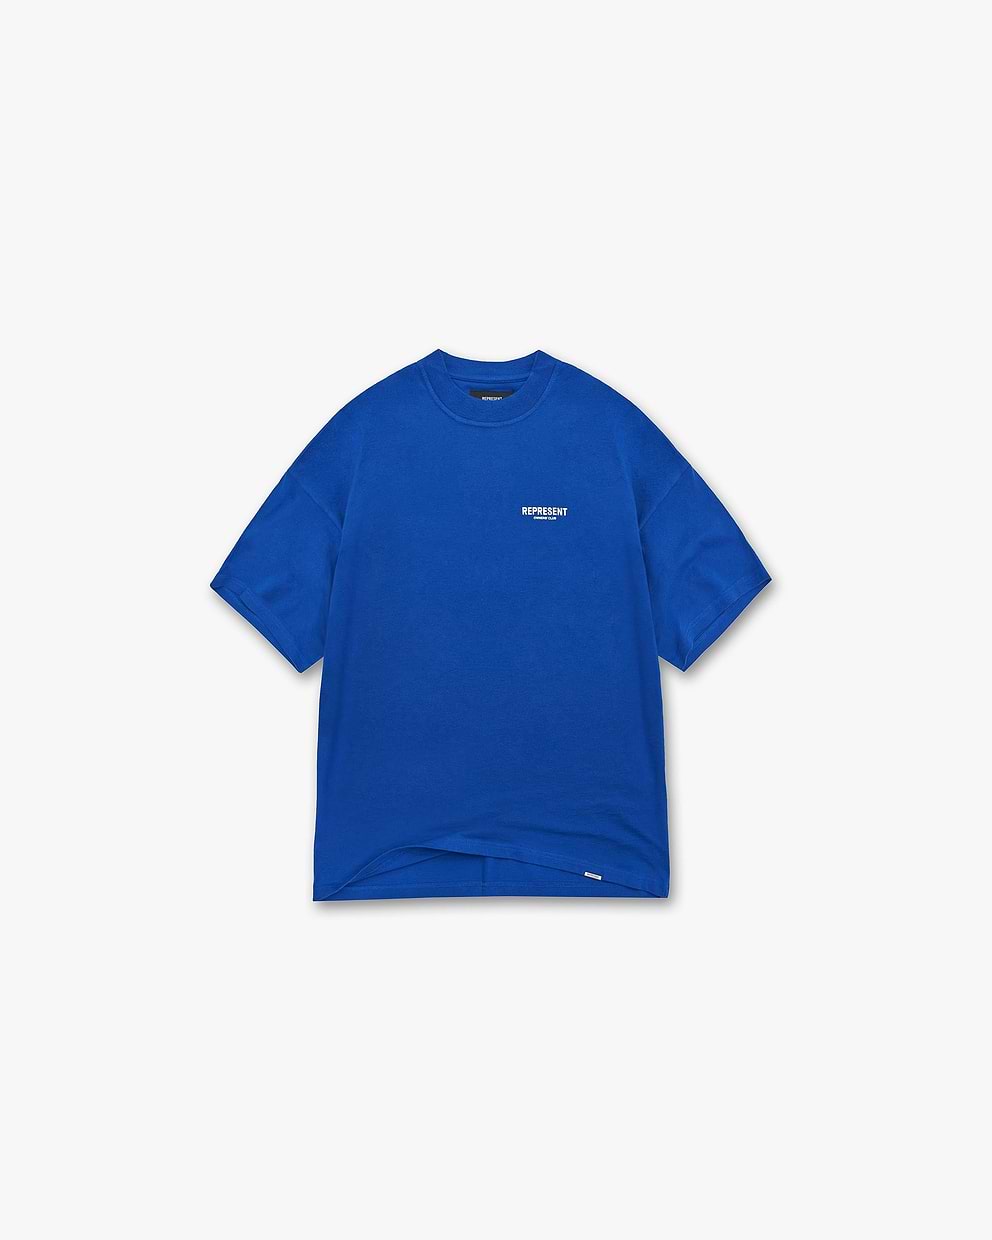 Cobalt Blue T-Shirt | Owners CLUB | REPRESENT CLO